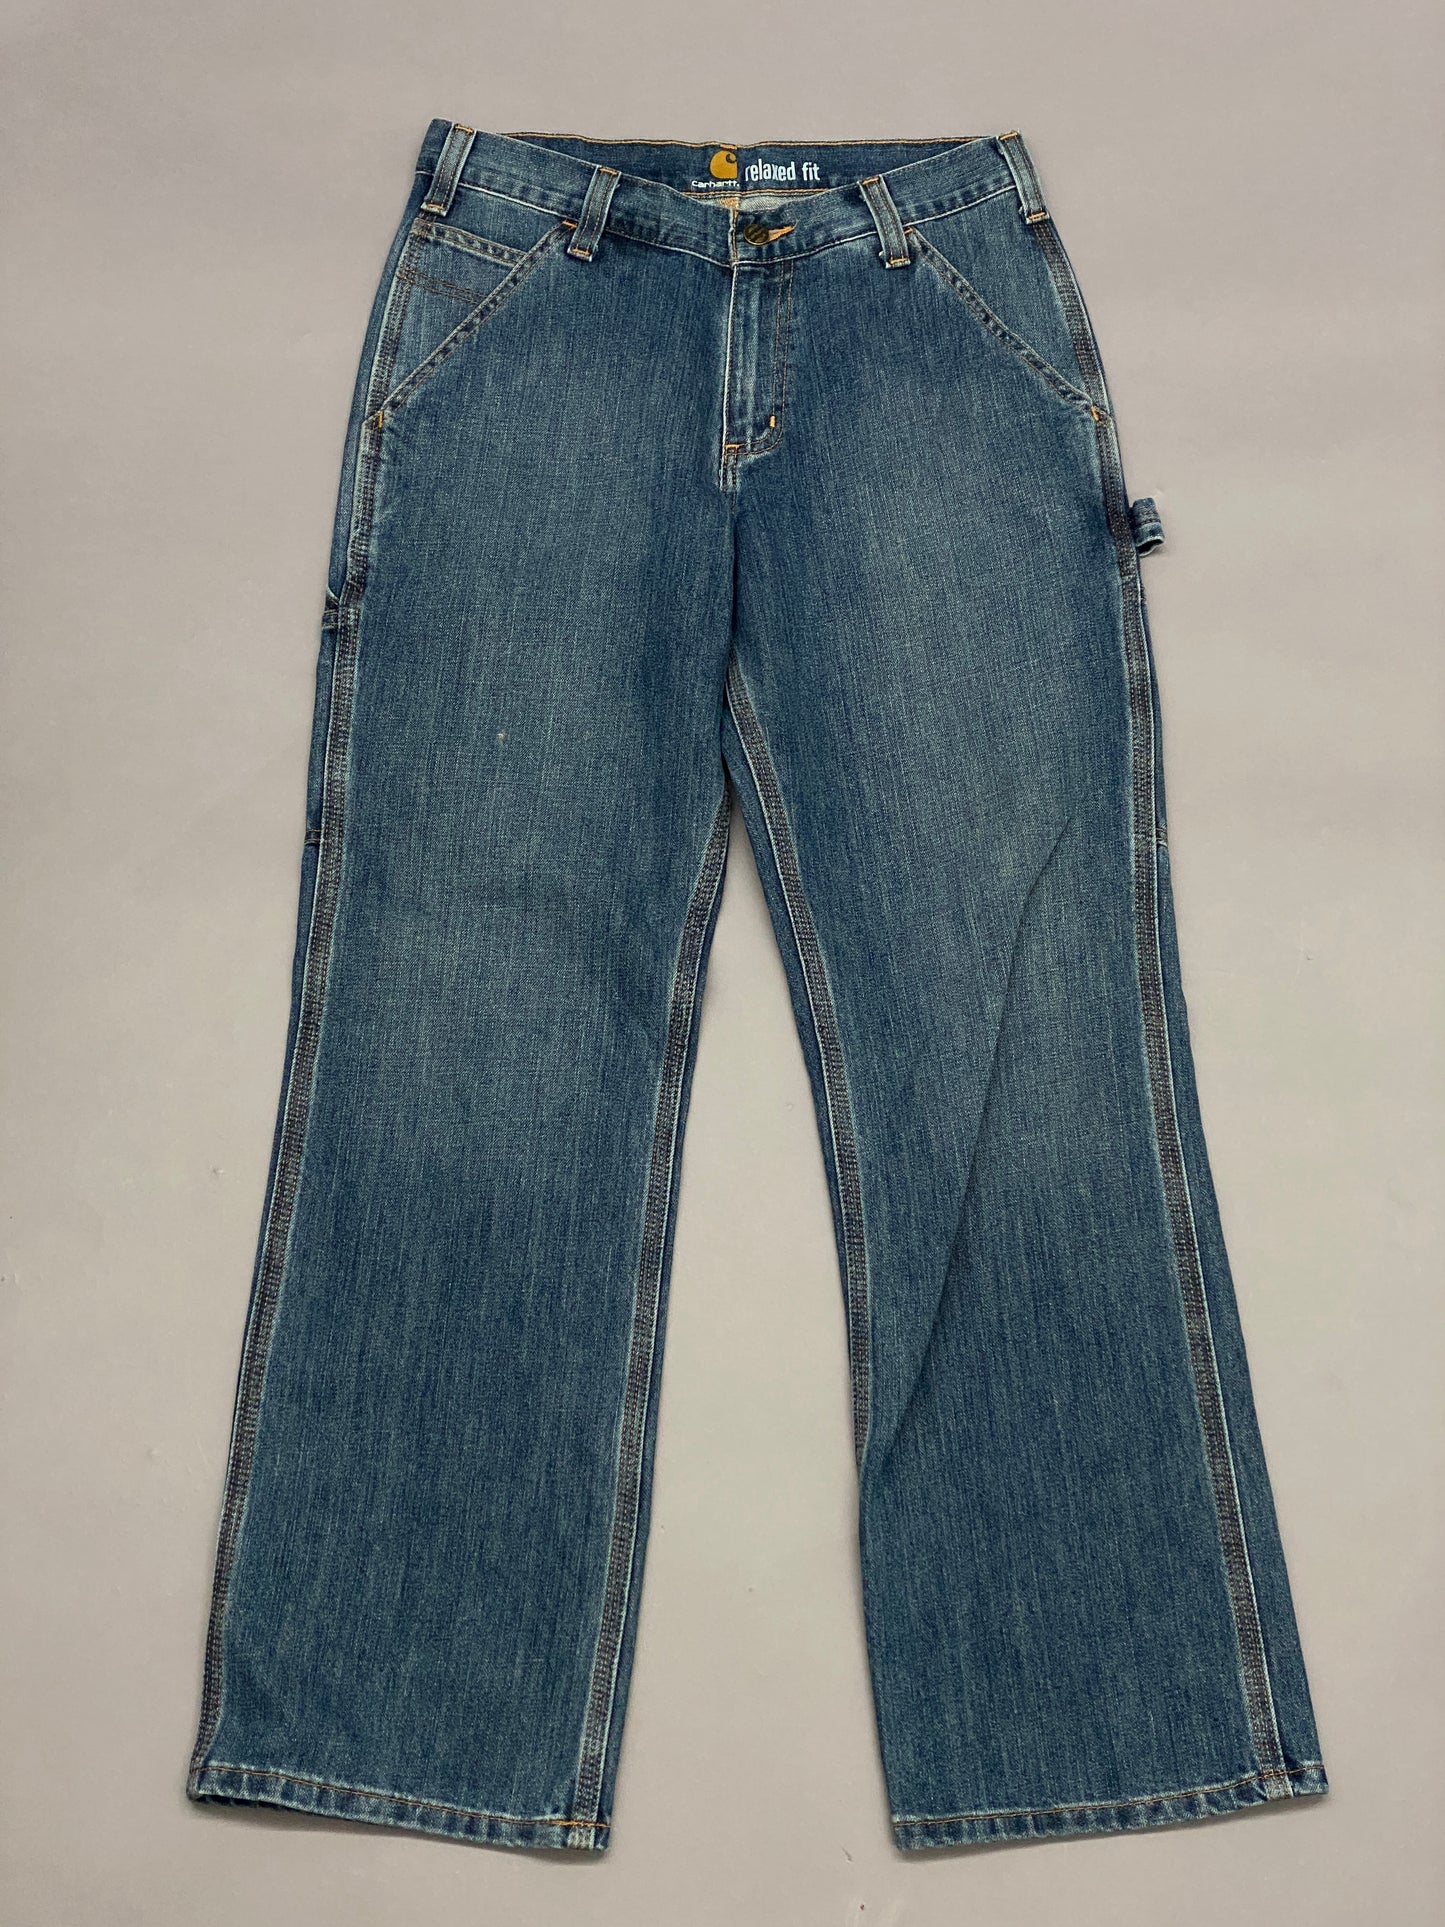 Pantalones Carhartt Jeans Carpenter - 30 x 30